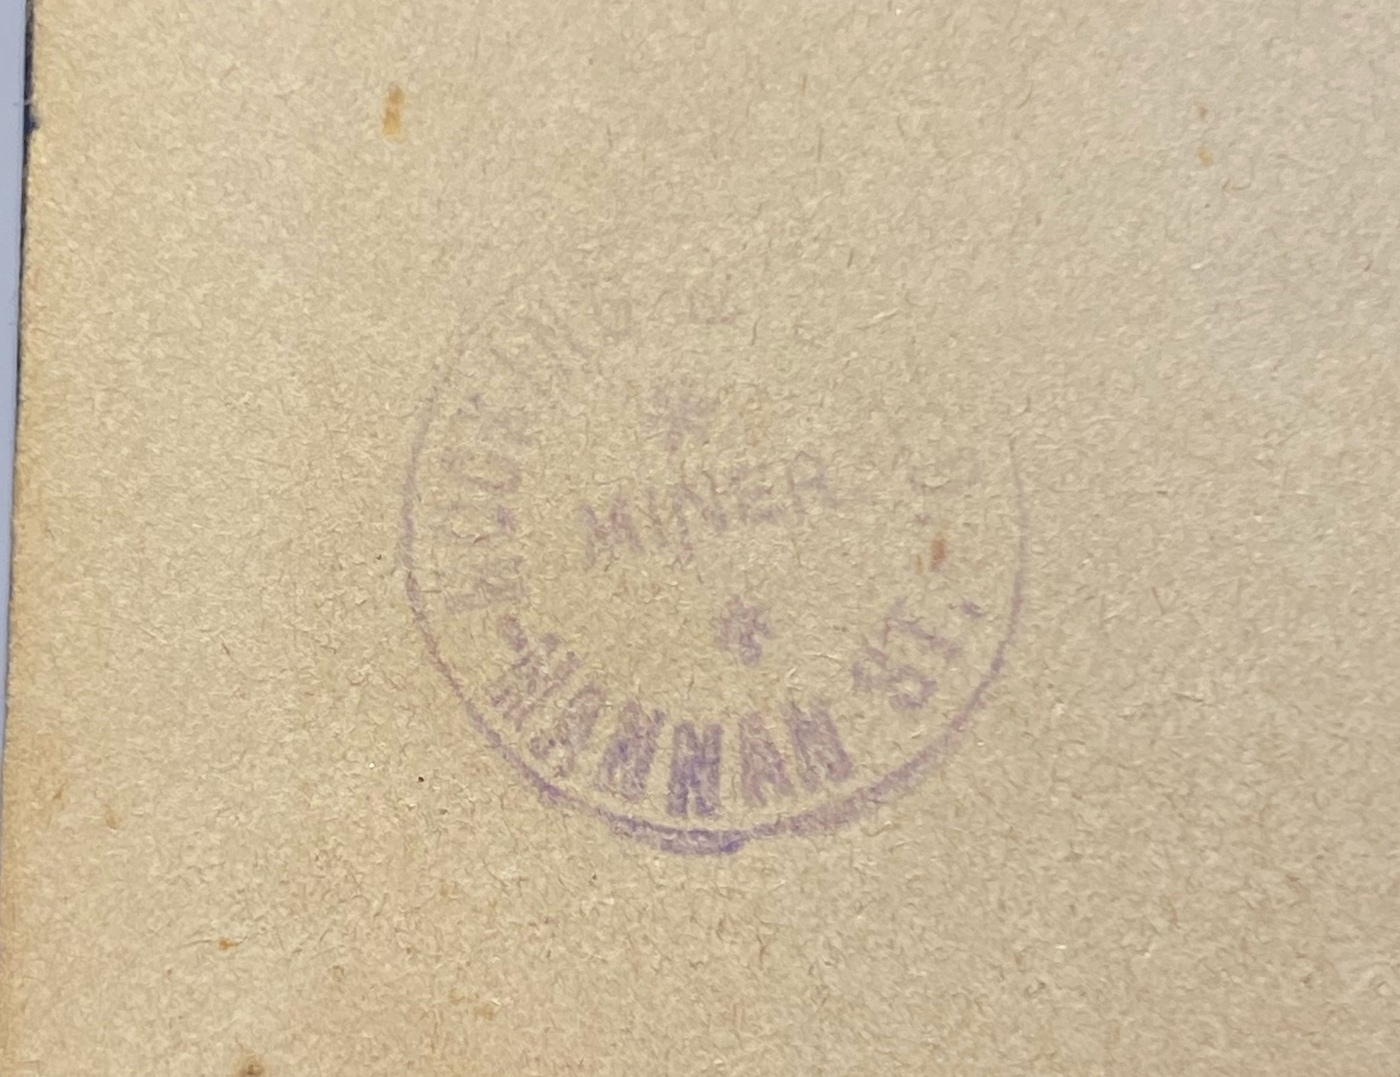 Weird stamp mark